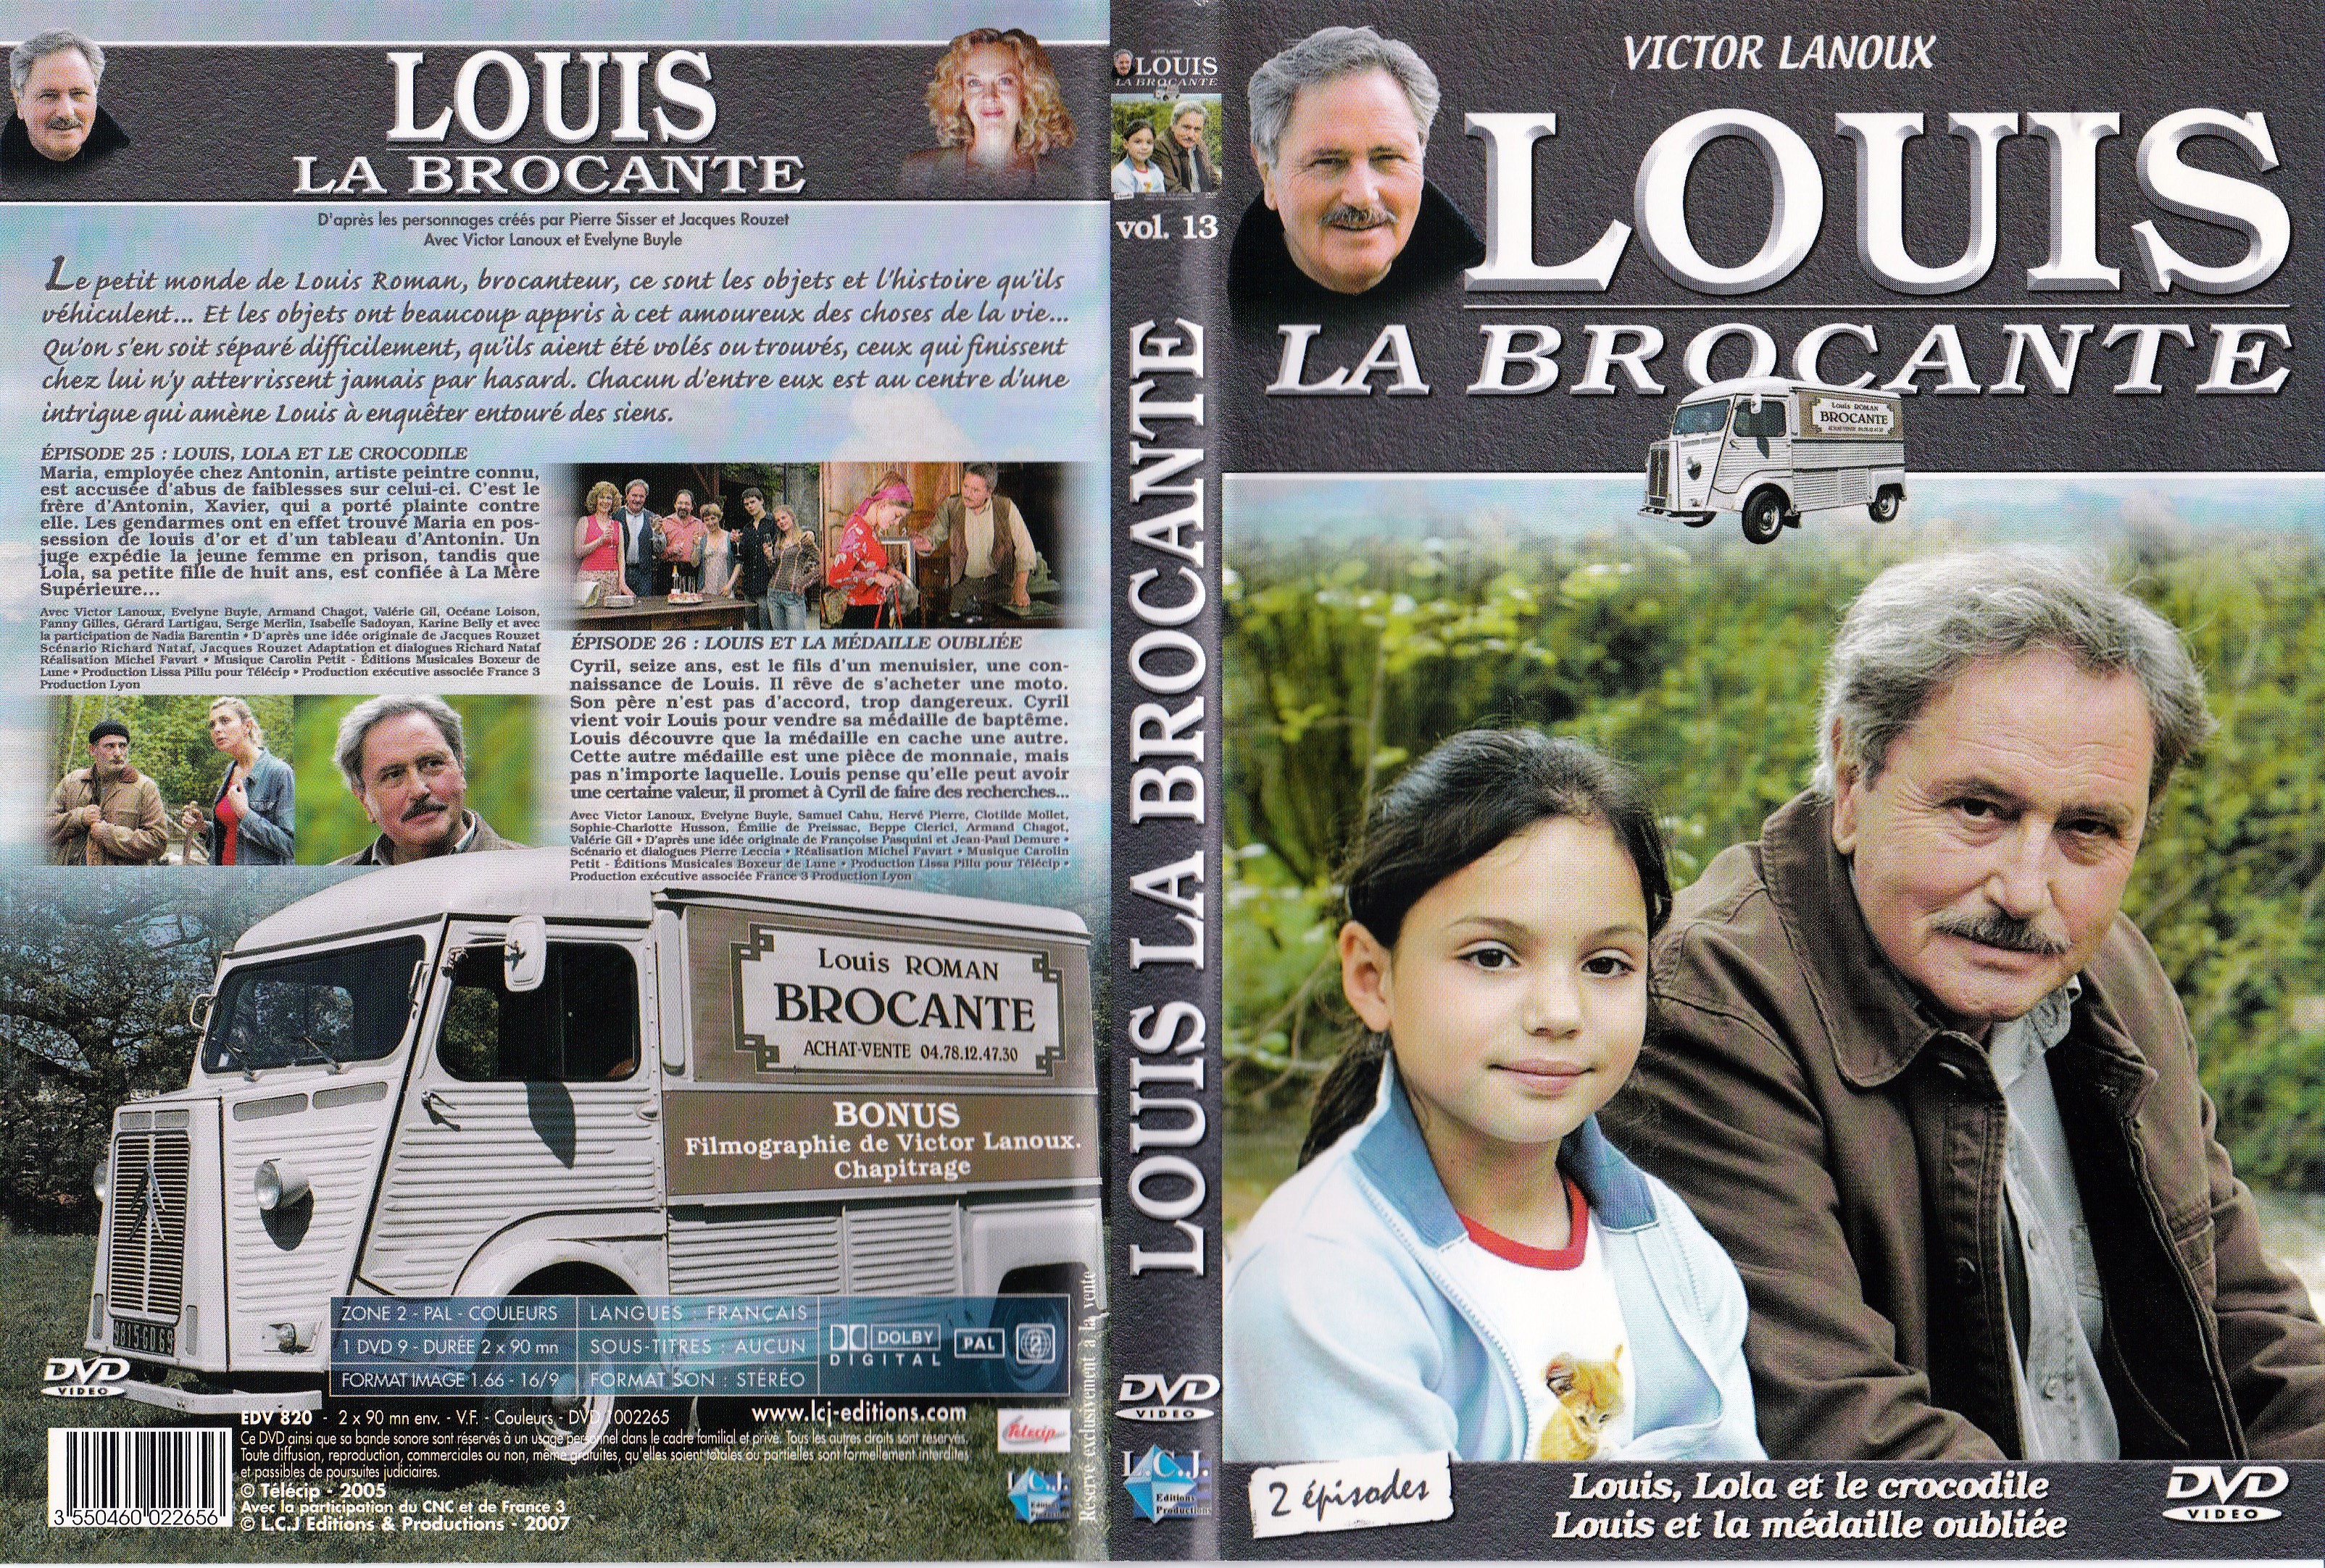 Jaquette DVD Louis la brocante vol 13